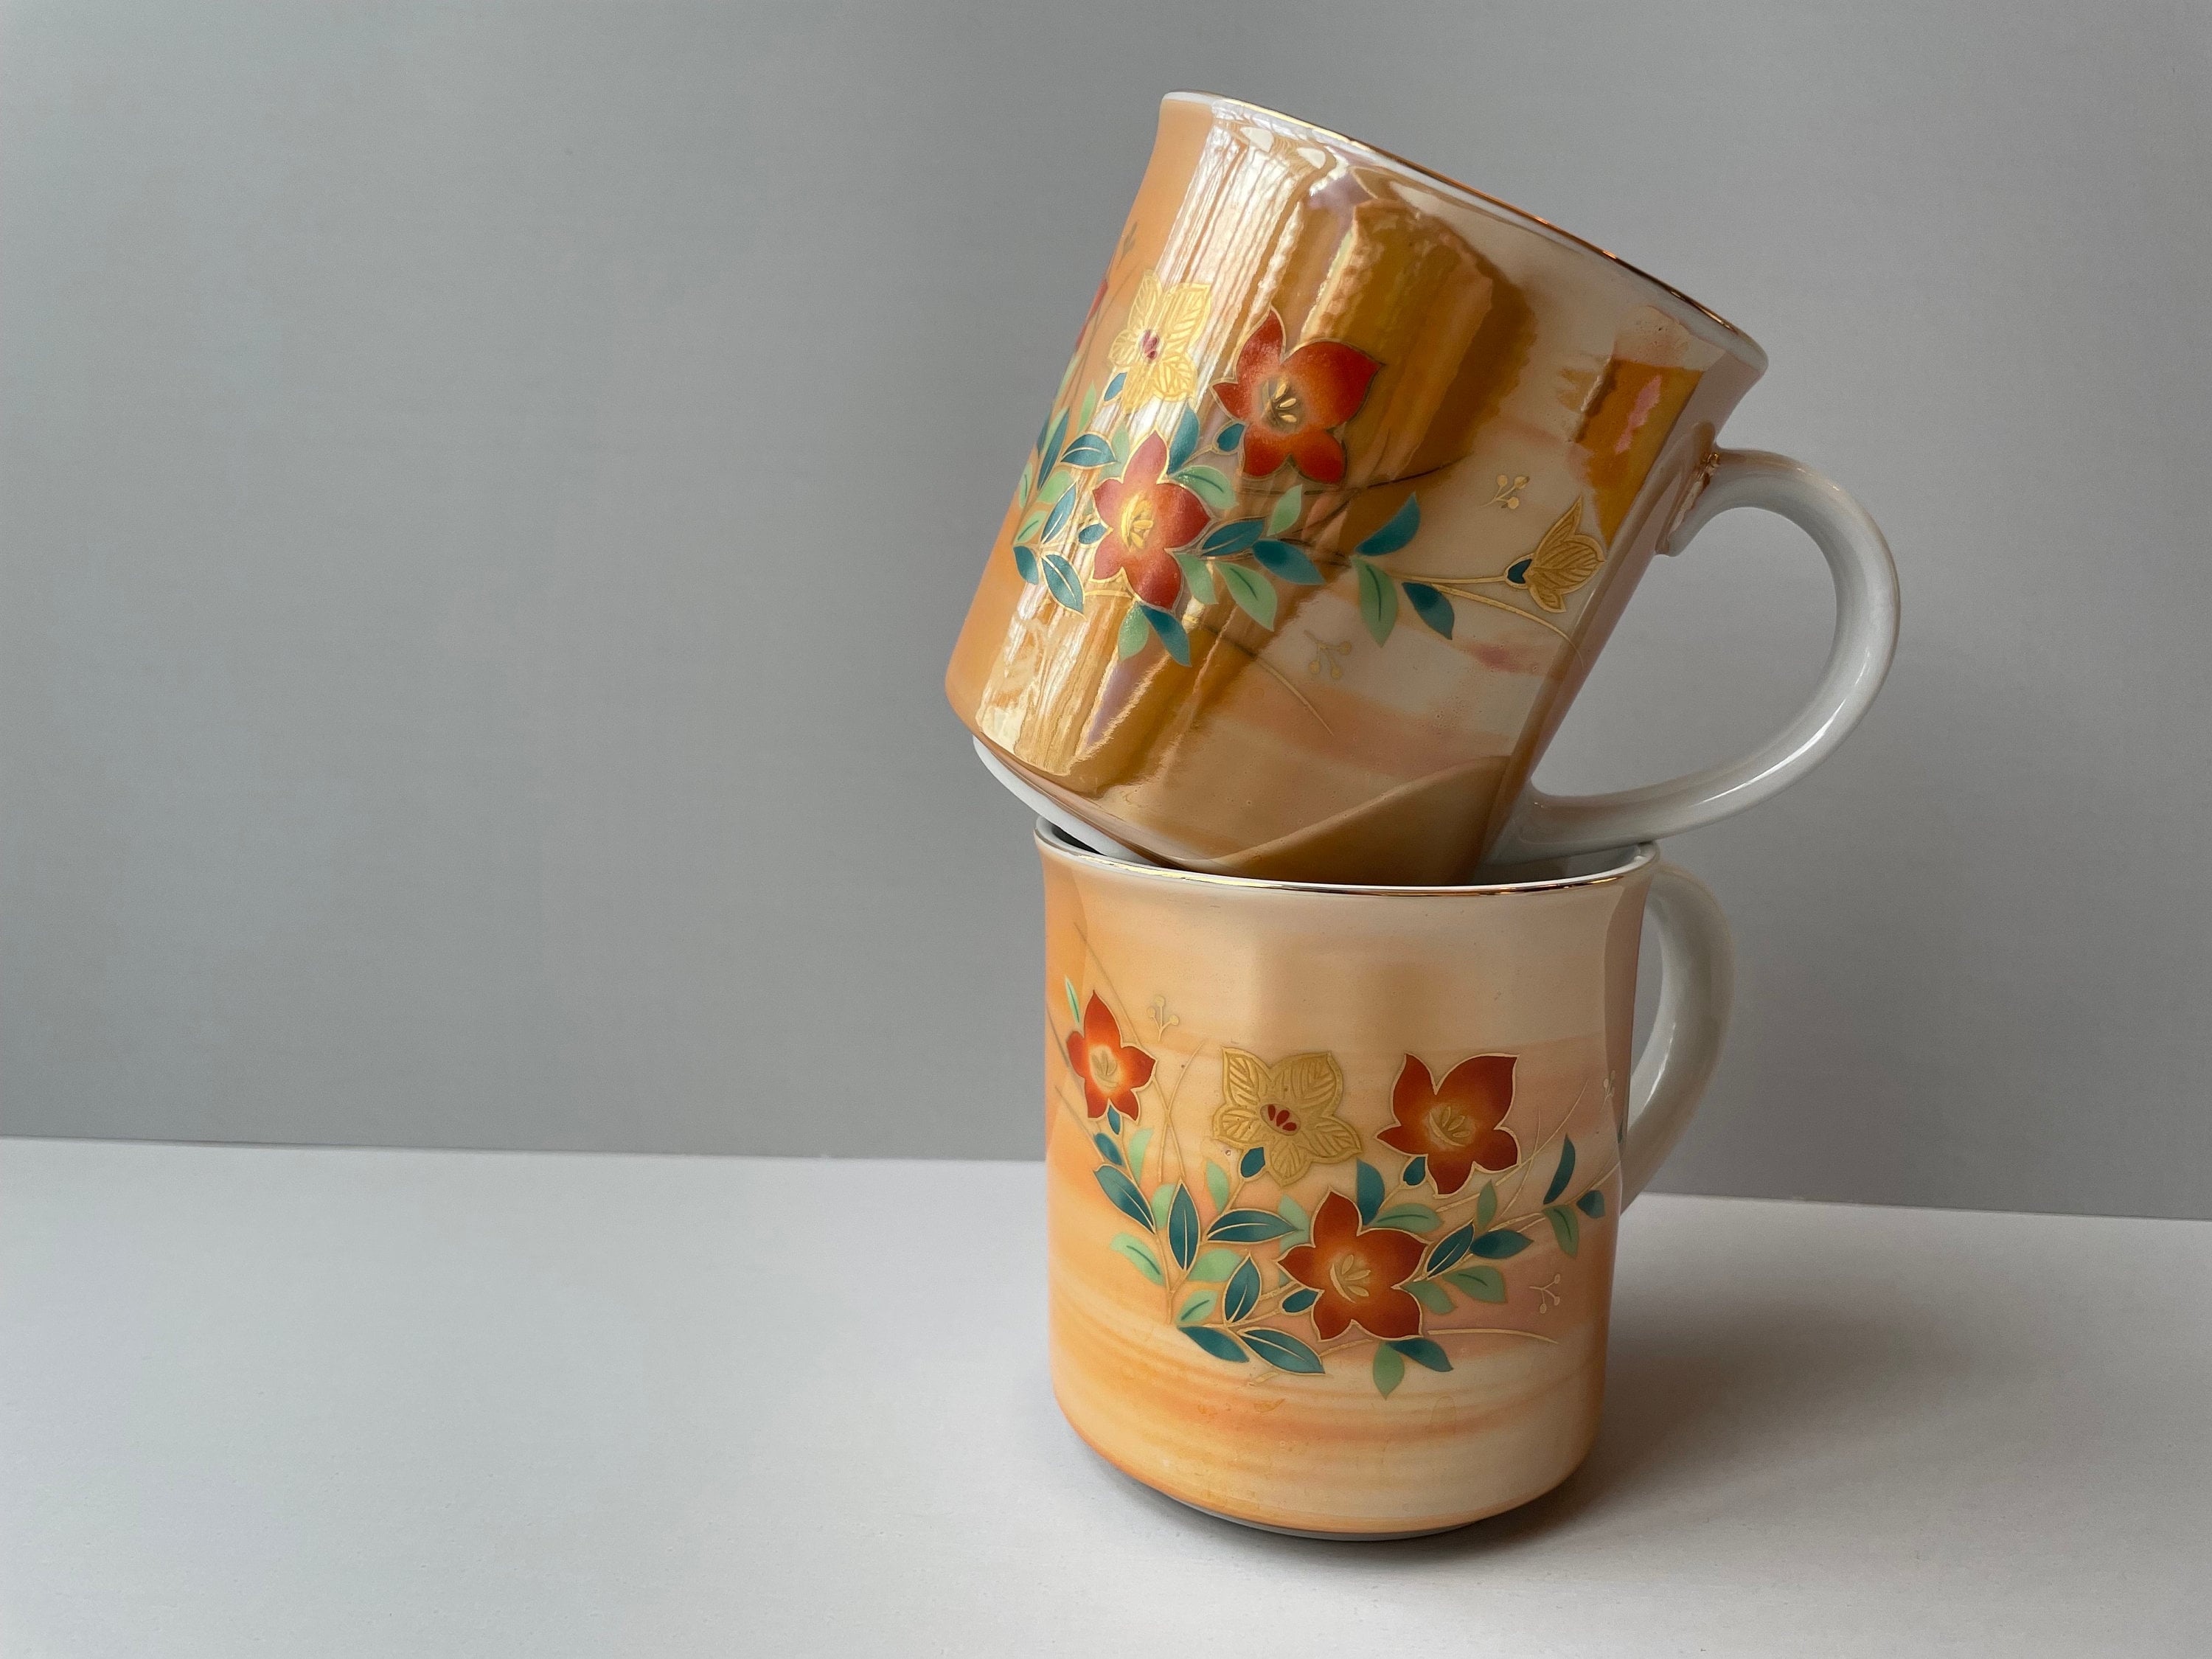 Yalucky Clear Iridescent Coffee Mug with Lid and Sakura Spoon Tea Cups  Glass Mugs Pretty Cute Mug fo…See more Yalucky Clear Iridescent Coffee Mug  with